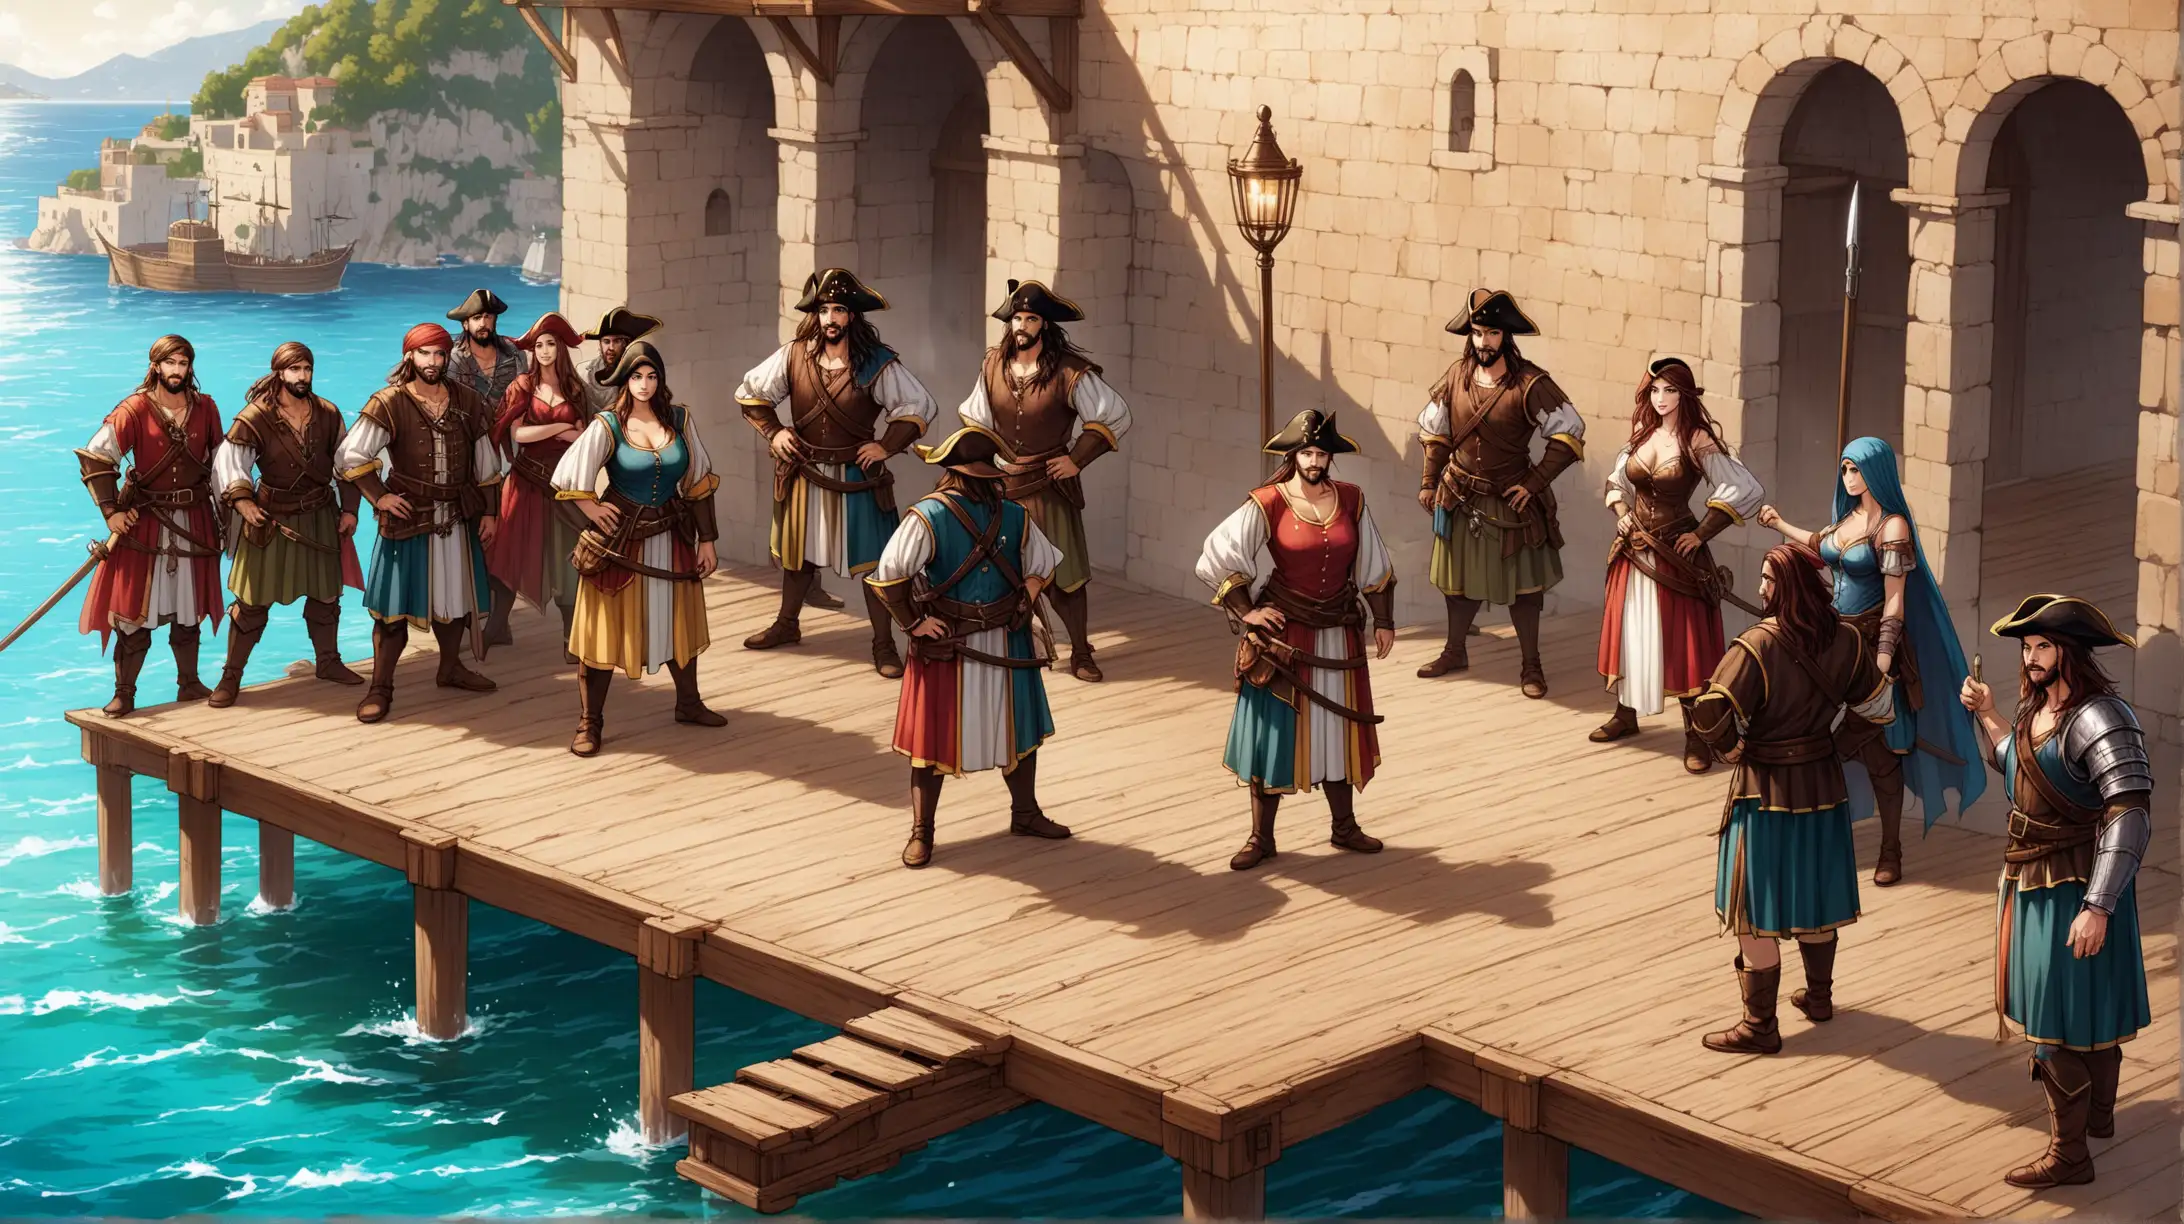 crew of pirates gladiators and wizards, men and women, Mediterranean, wooden dock, Medieval fantasy